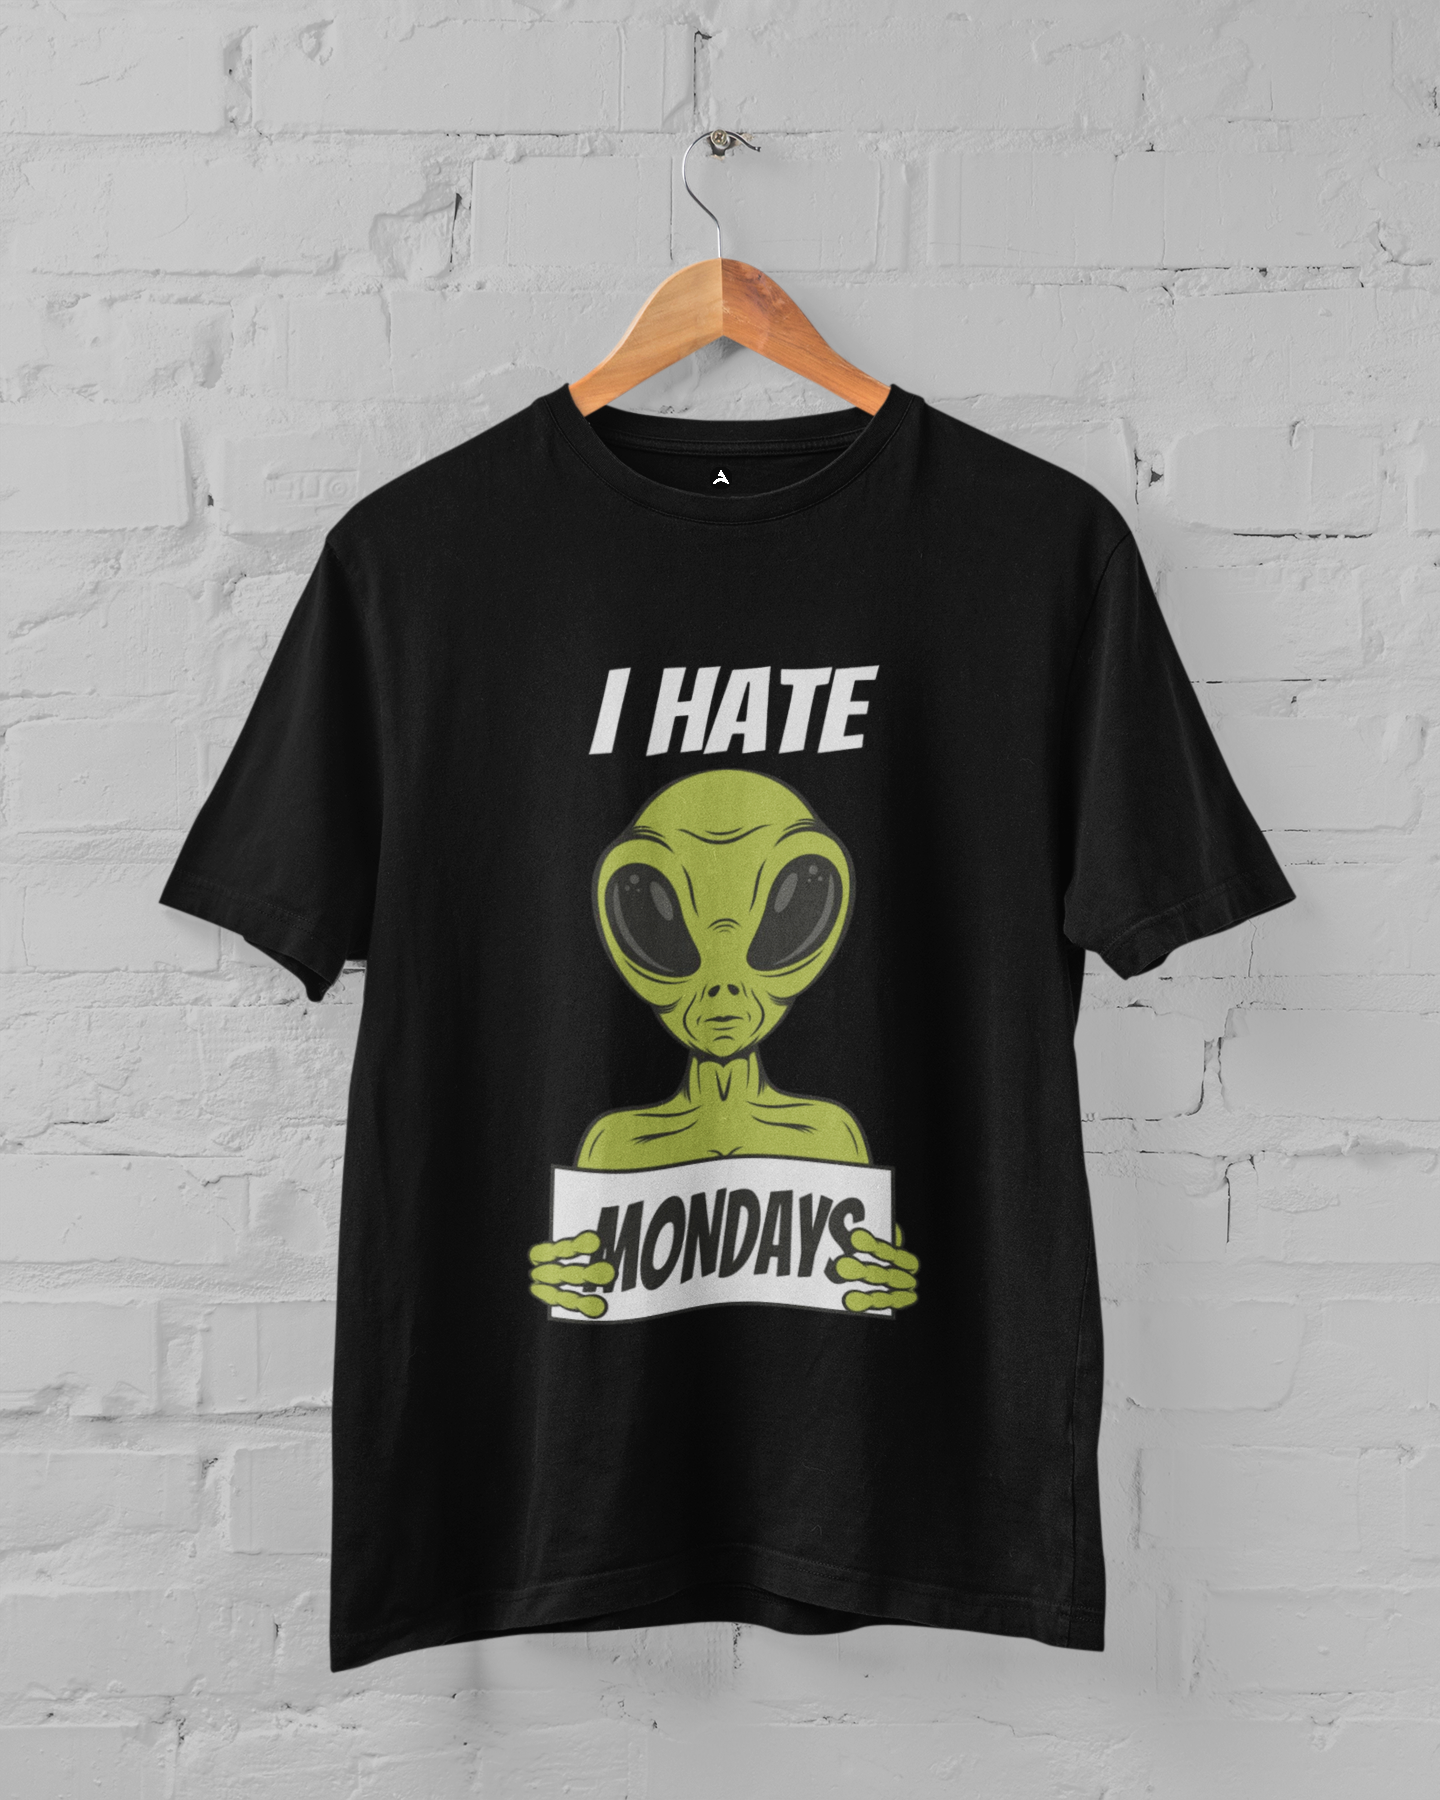 I HATE MONDAYS : ALIEN & SPACE- HALF-SLEEVE T-SHIRTS BLACK